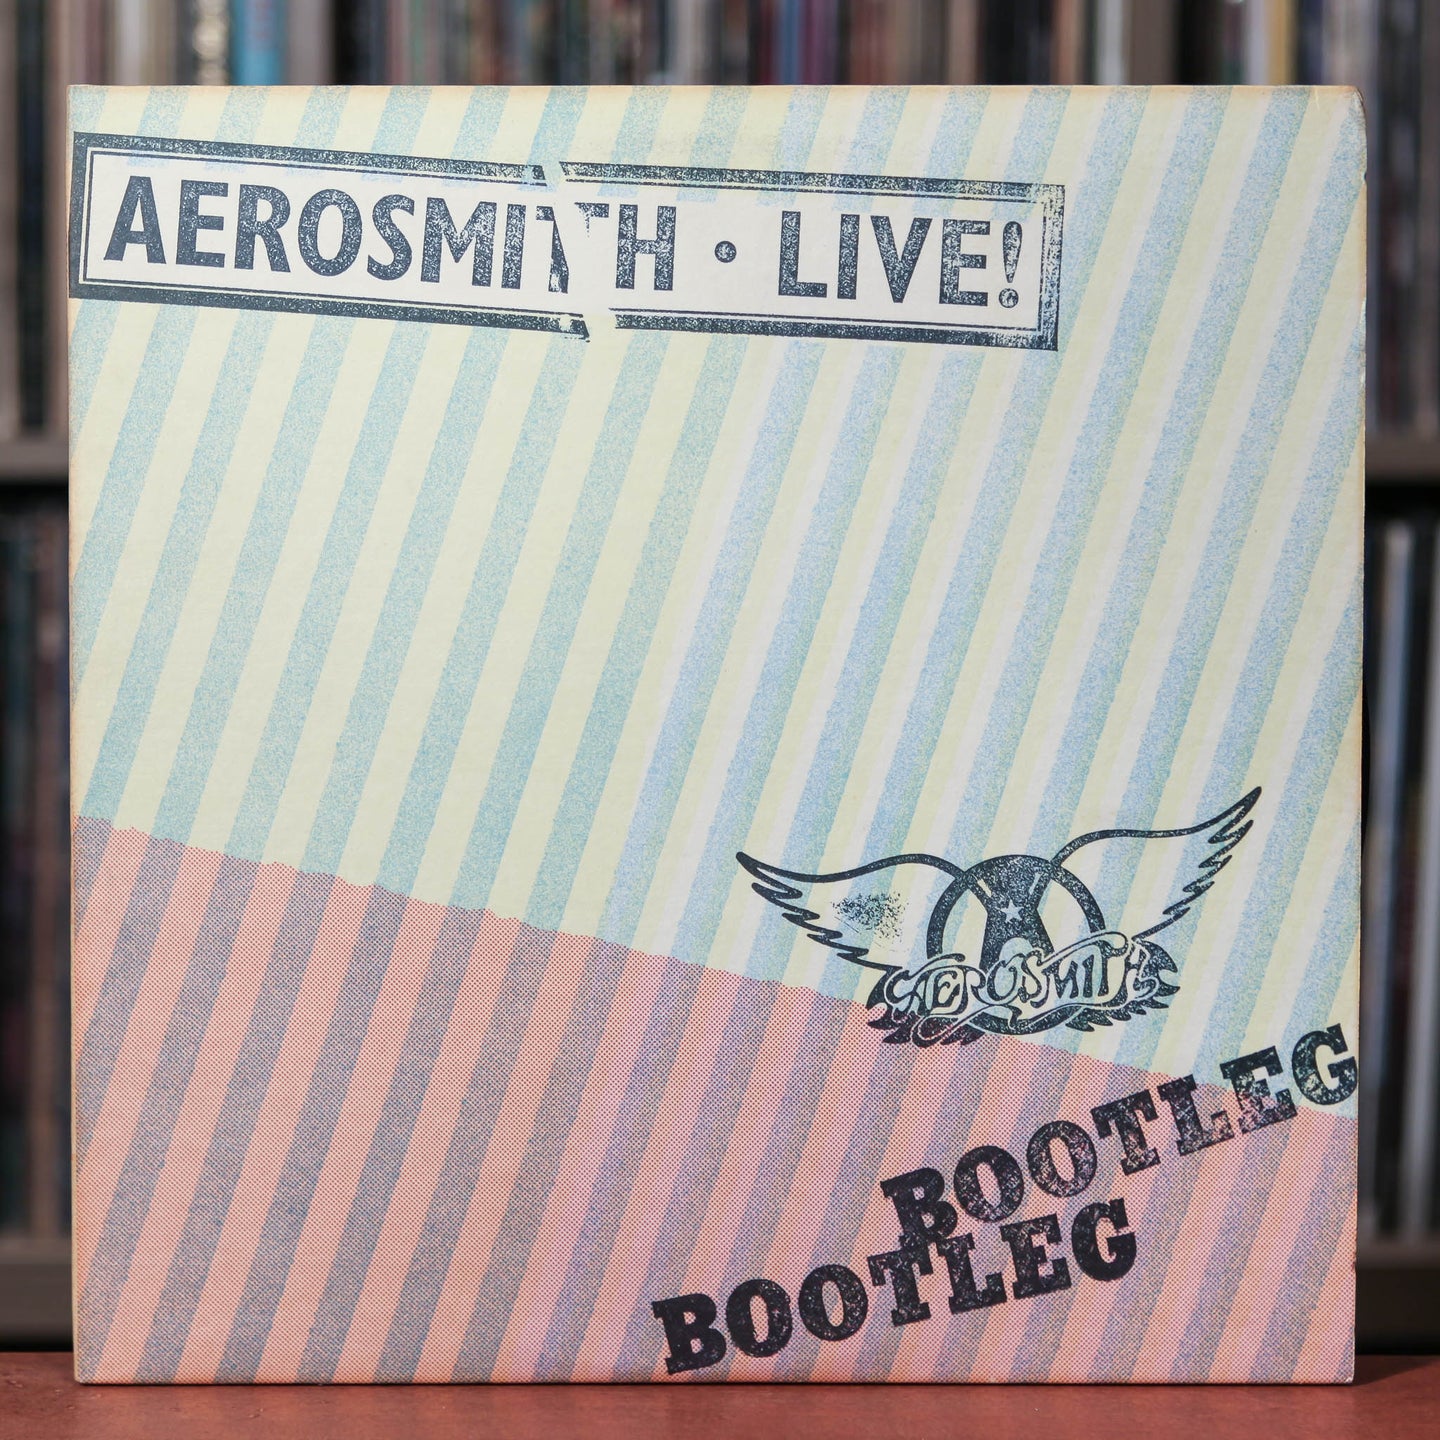 Aerosmith - Live! Bootleg - 2LP - 1978 Columbia, EX/VG+